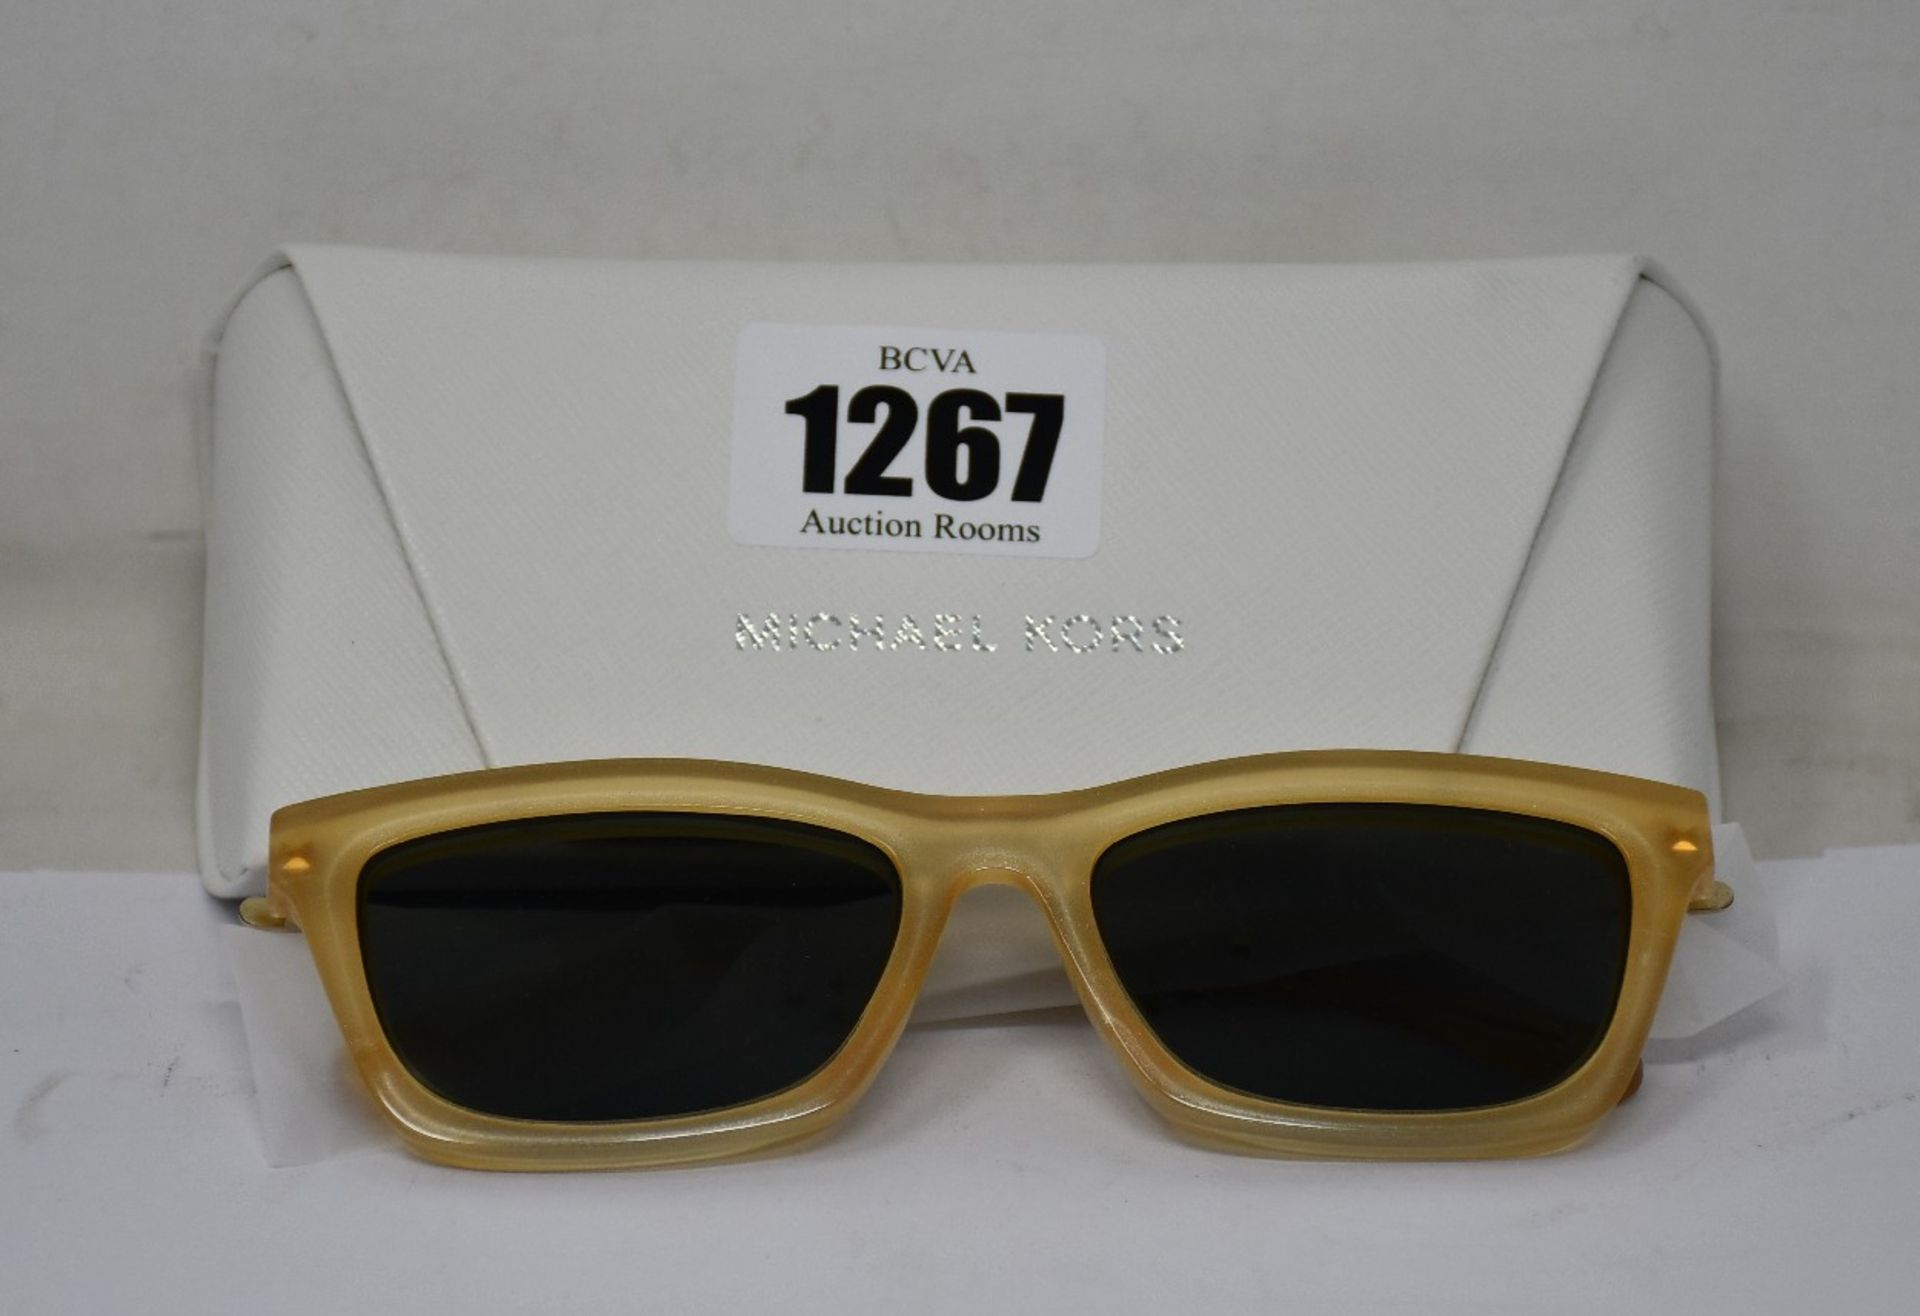 A pair of as new Michael Kors sunglasses.